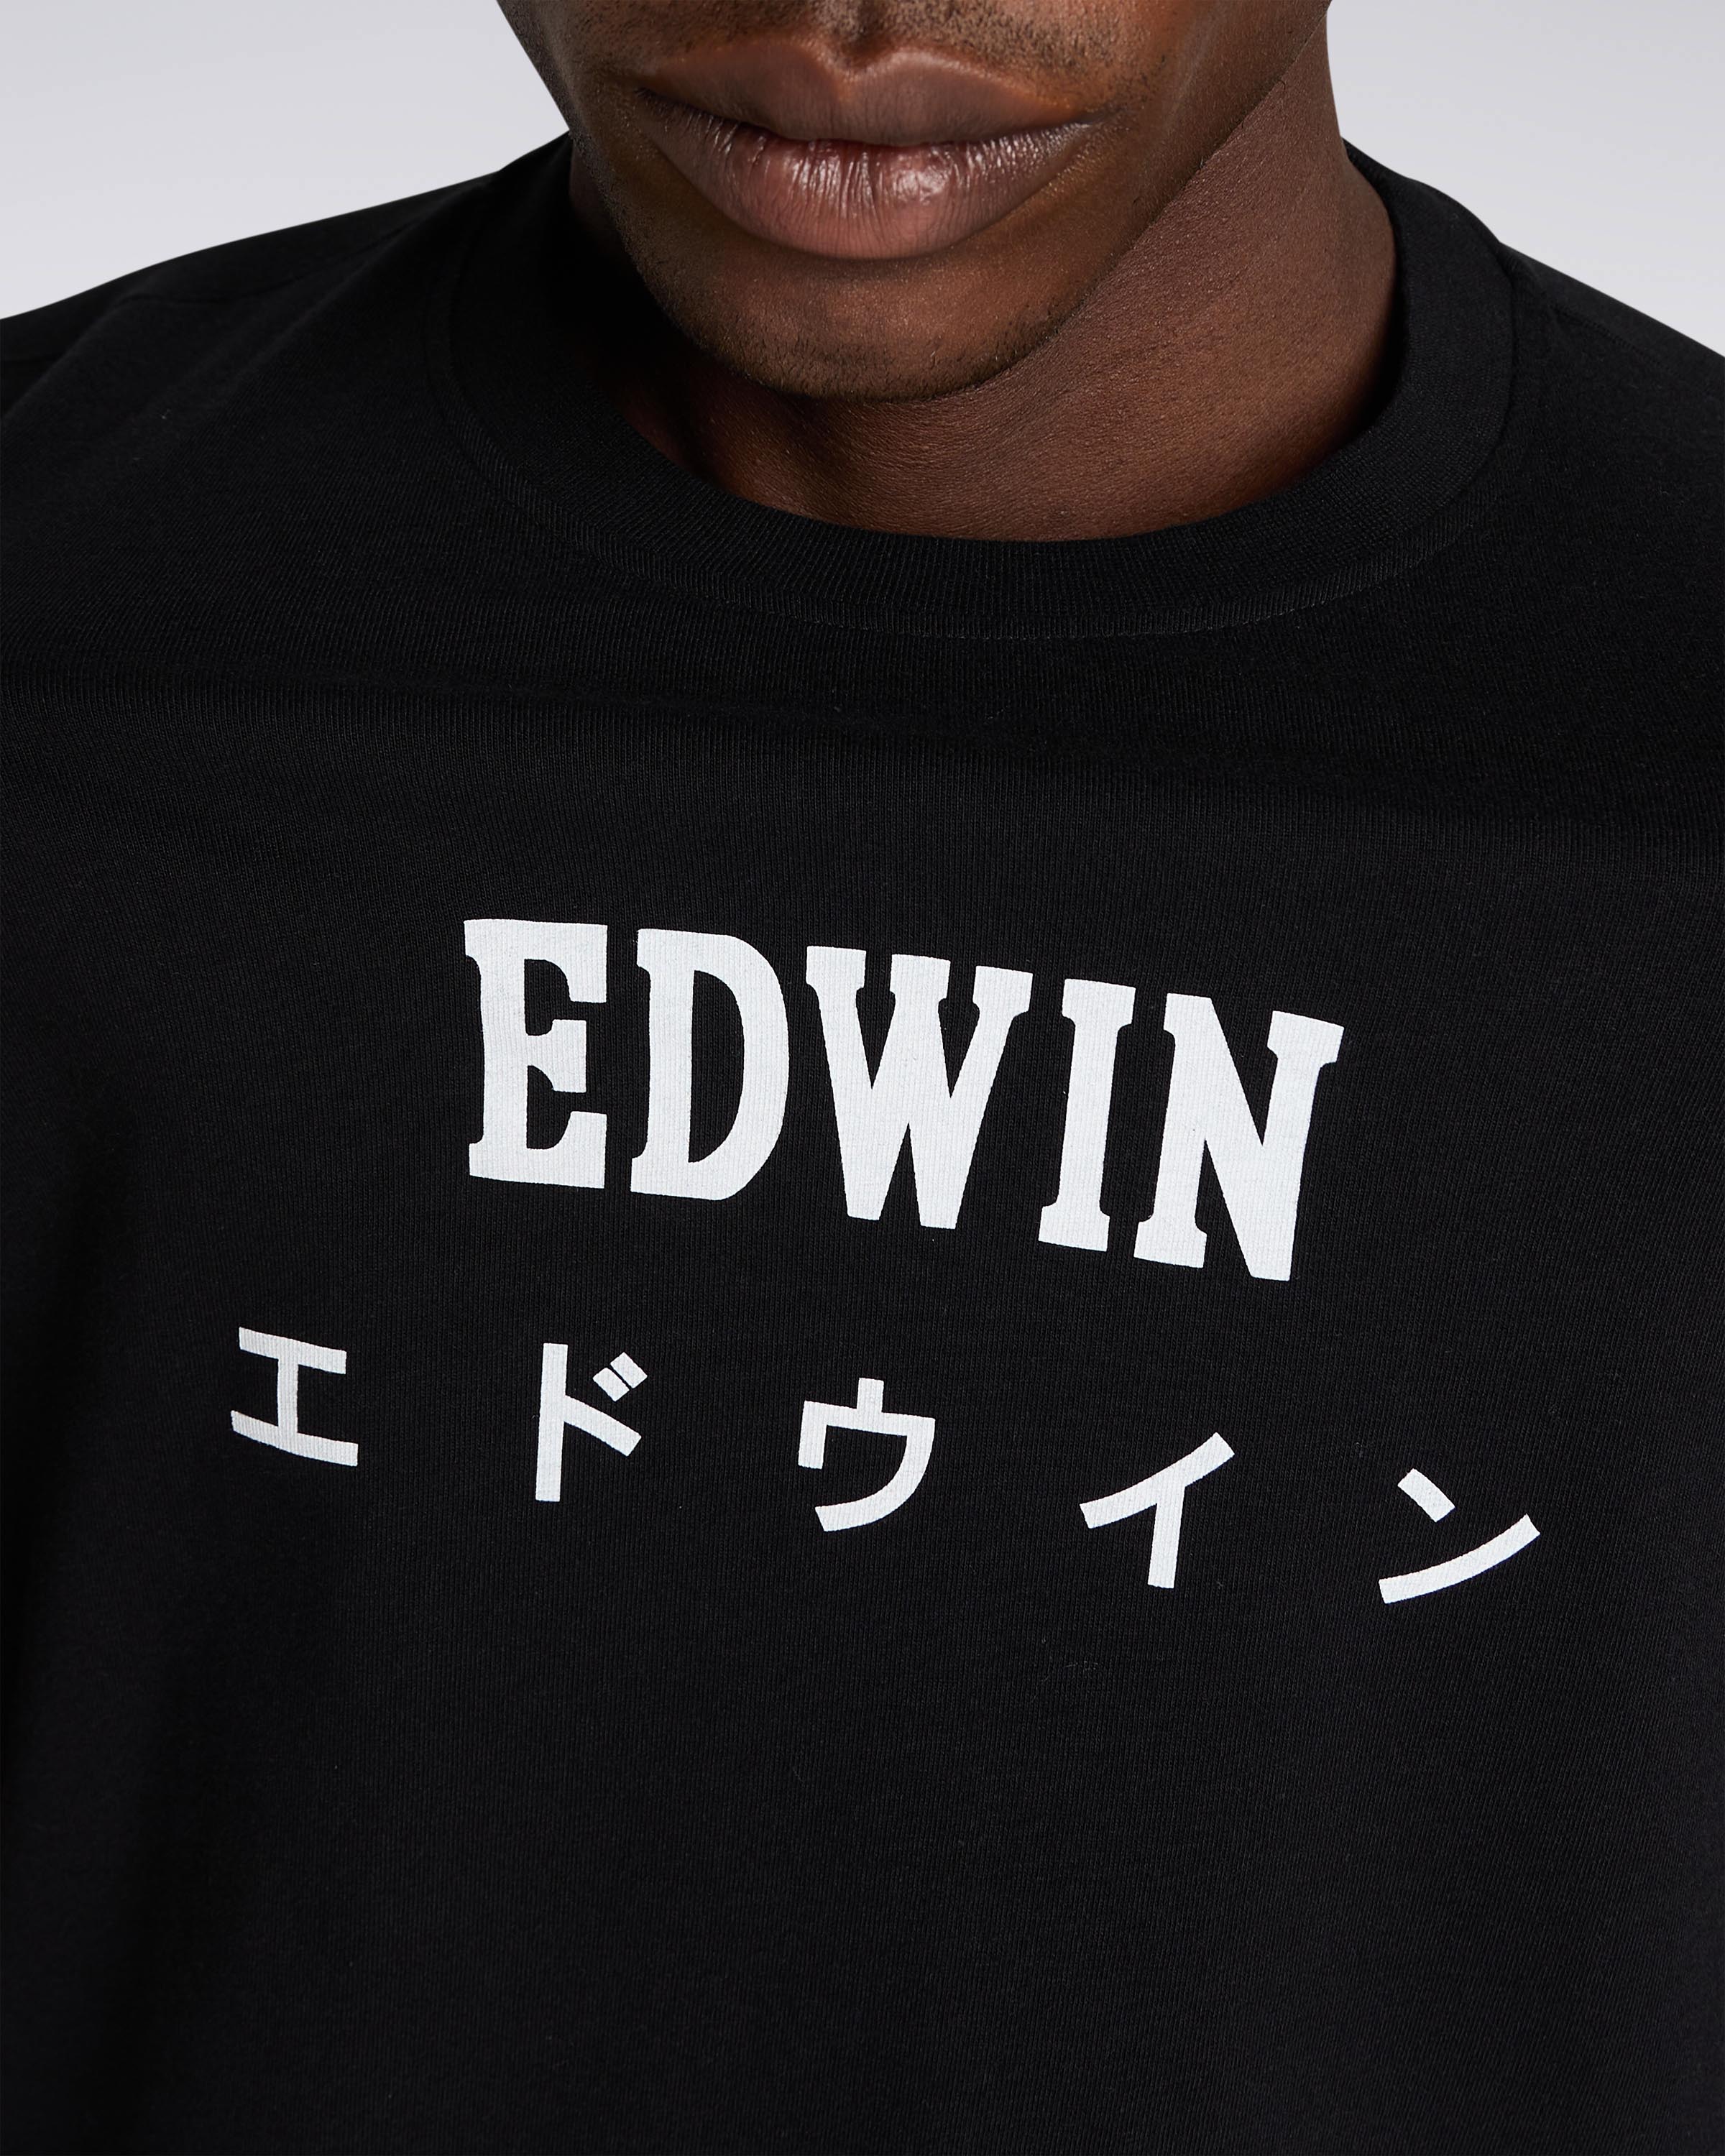 Edwin Japan T-Shirt